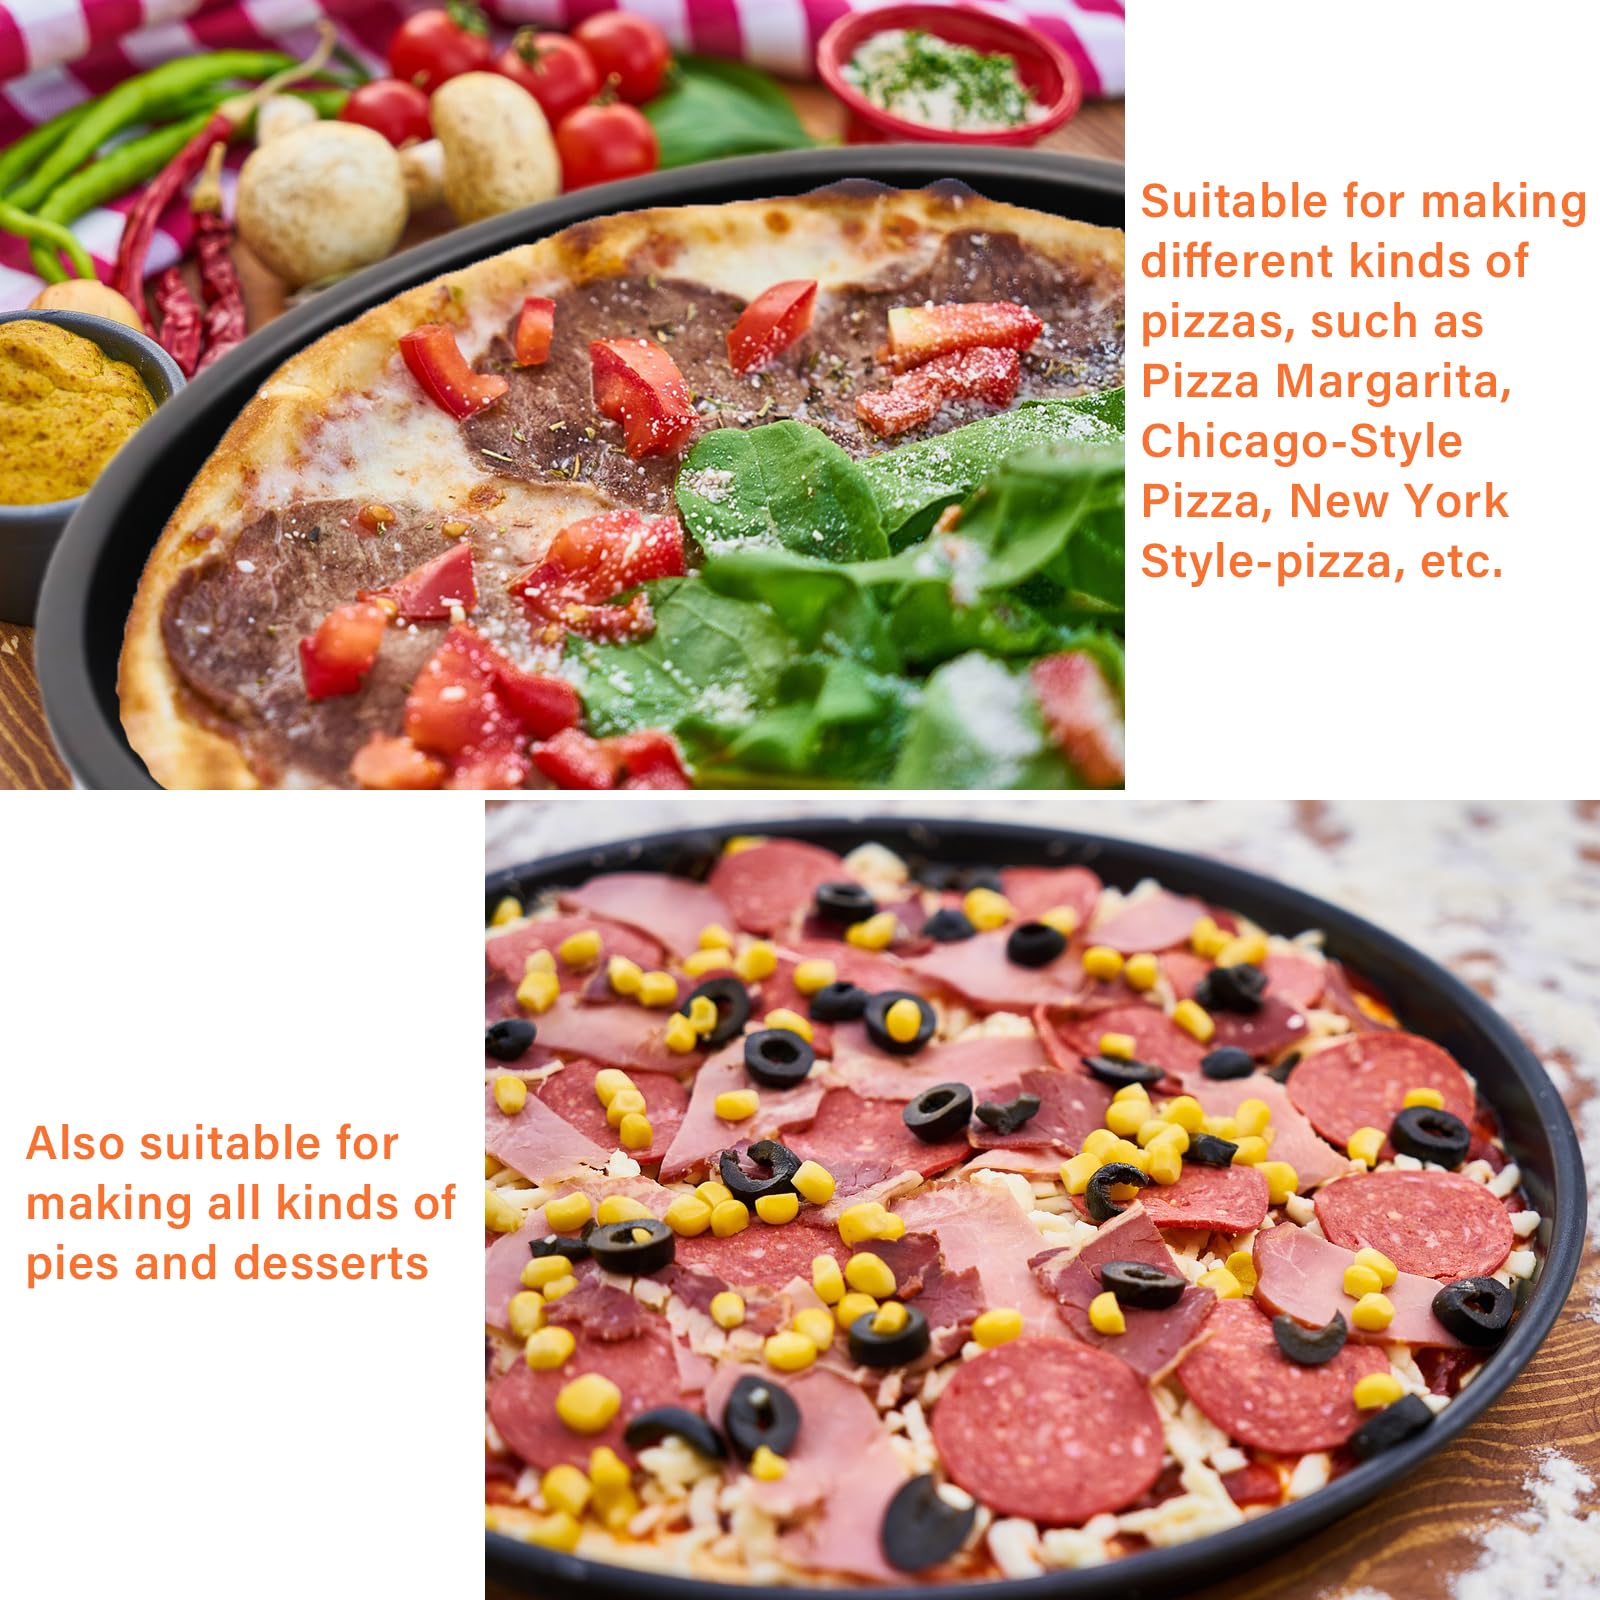 Savagrow 3pcs 6inch Non-Stick Bakeware Pizza Pan Aluminum Baking Pan for Healthy & Durable